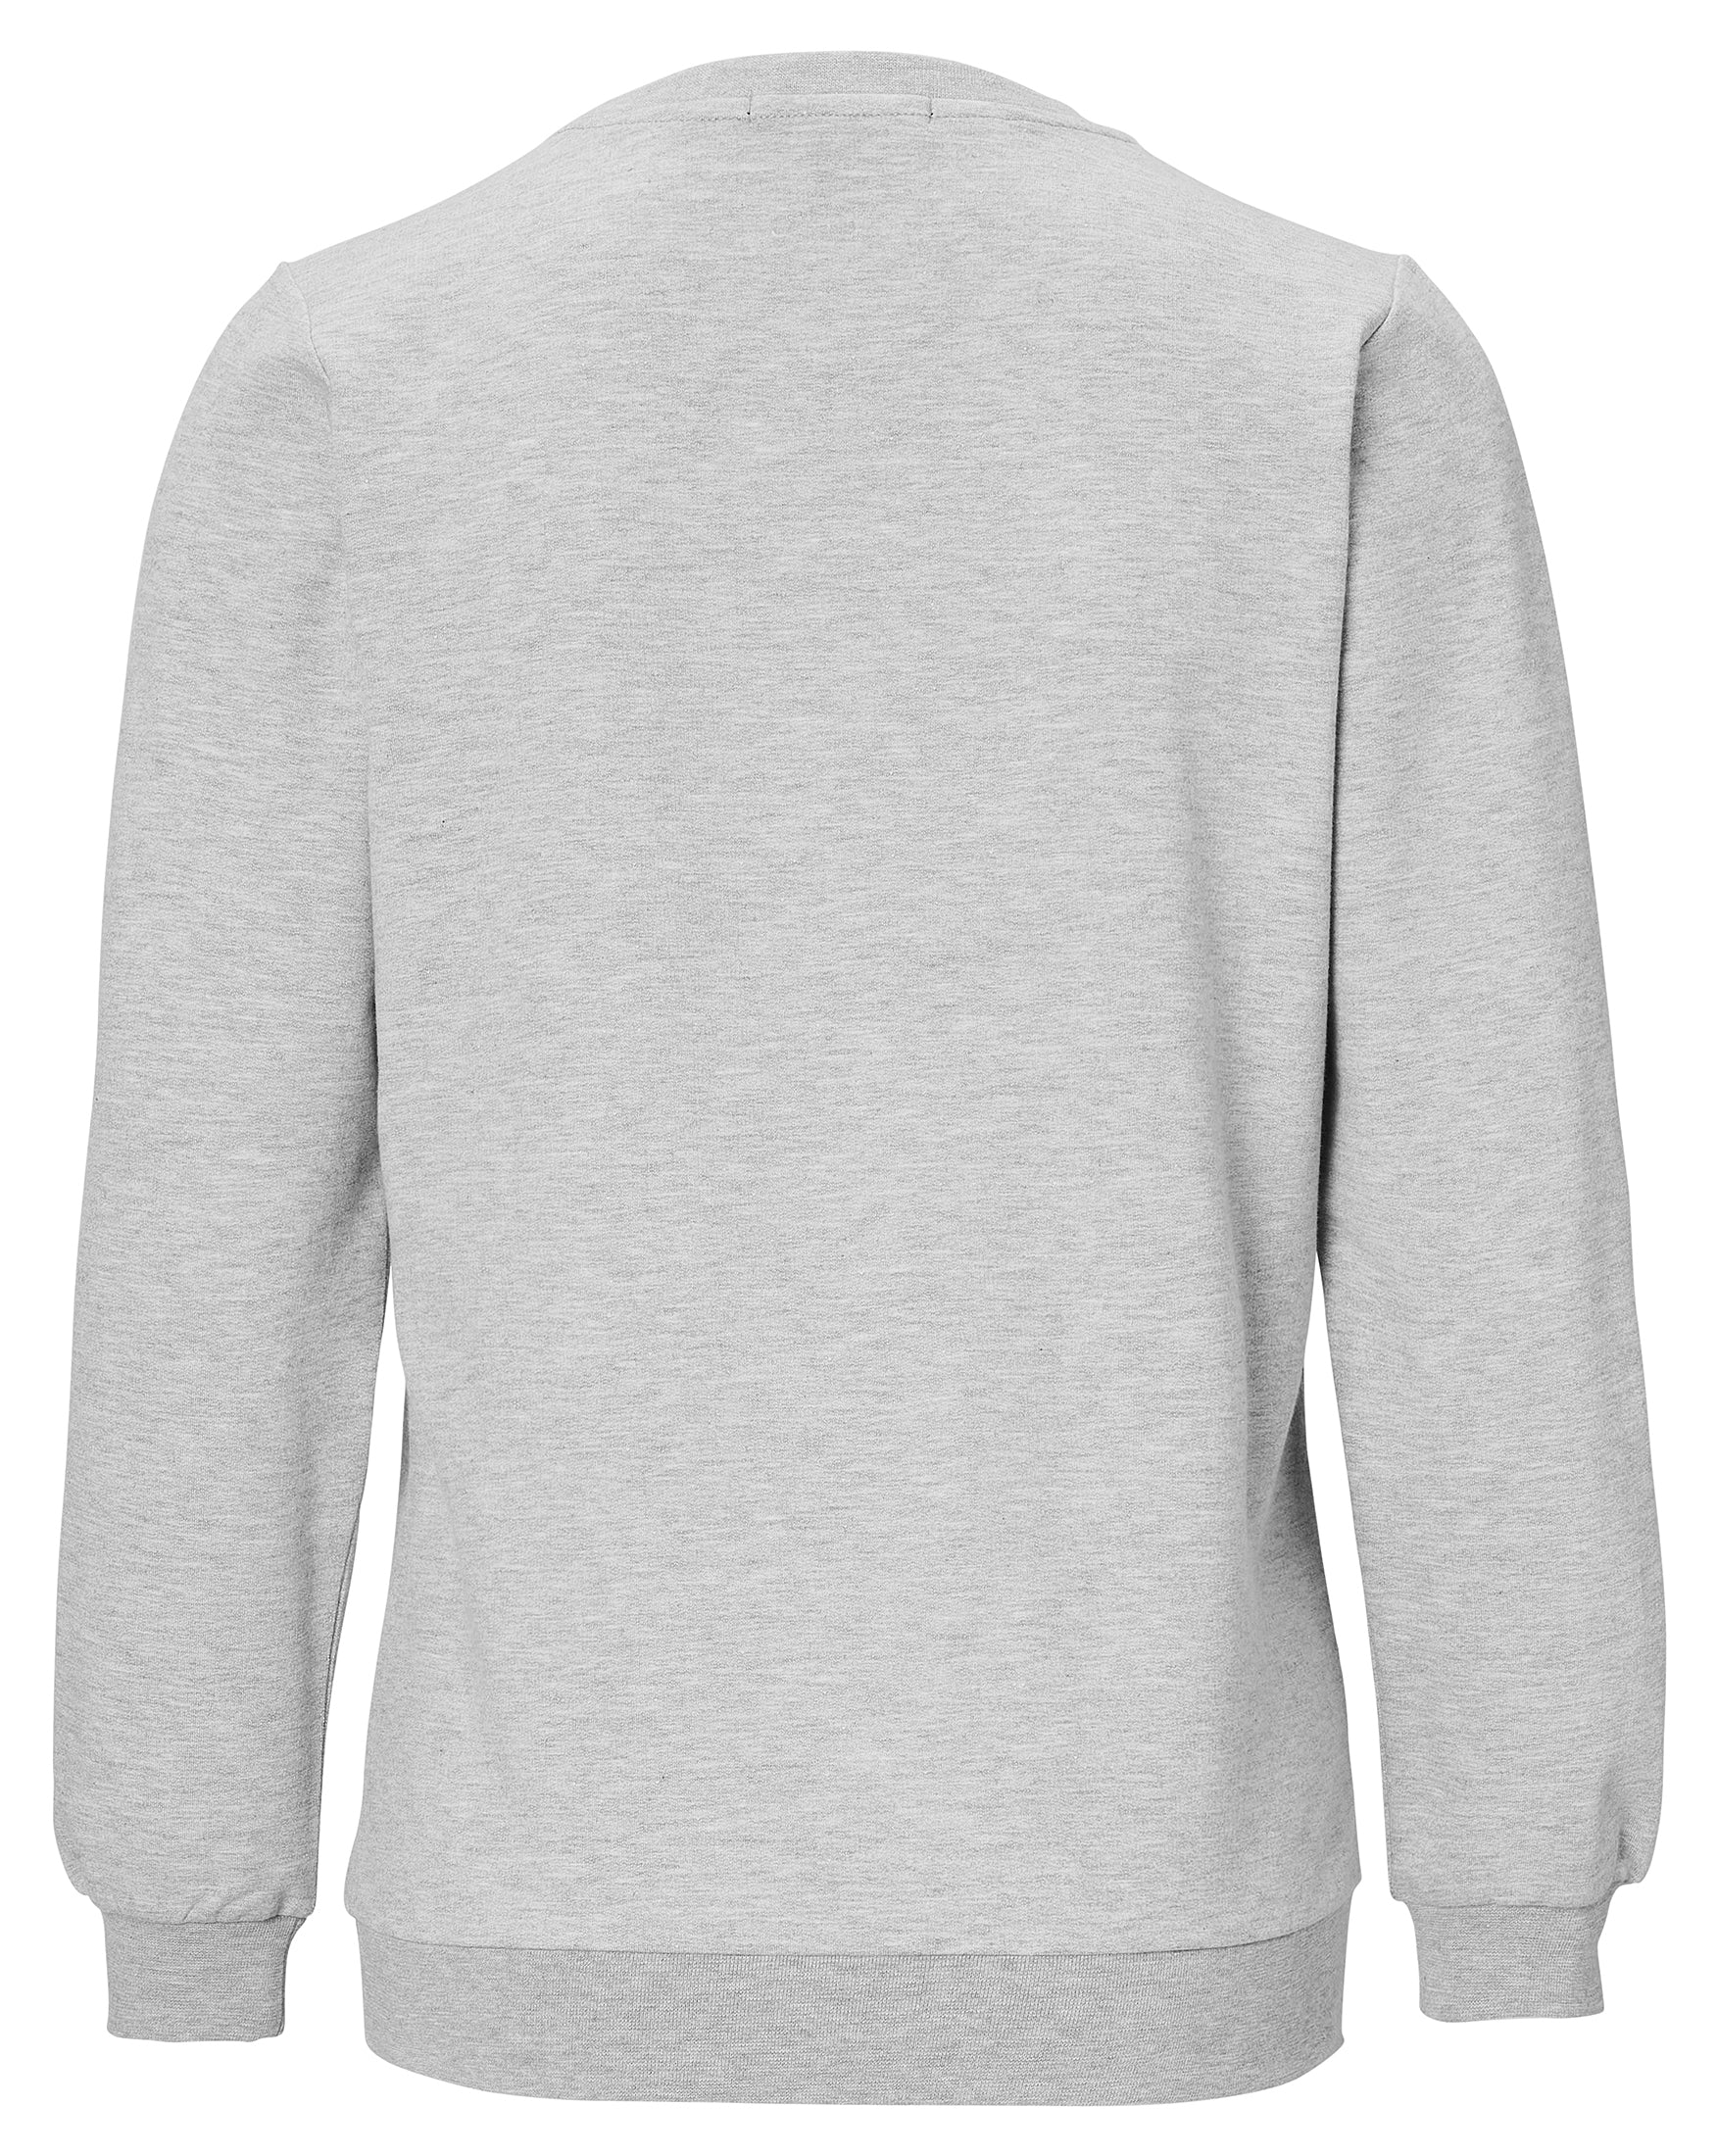 Sweater Amour - Grey Melange